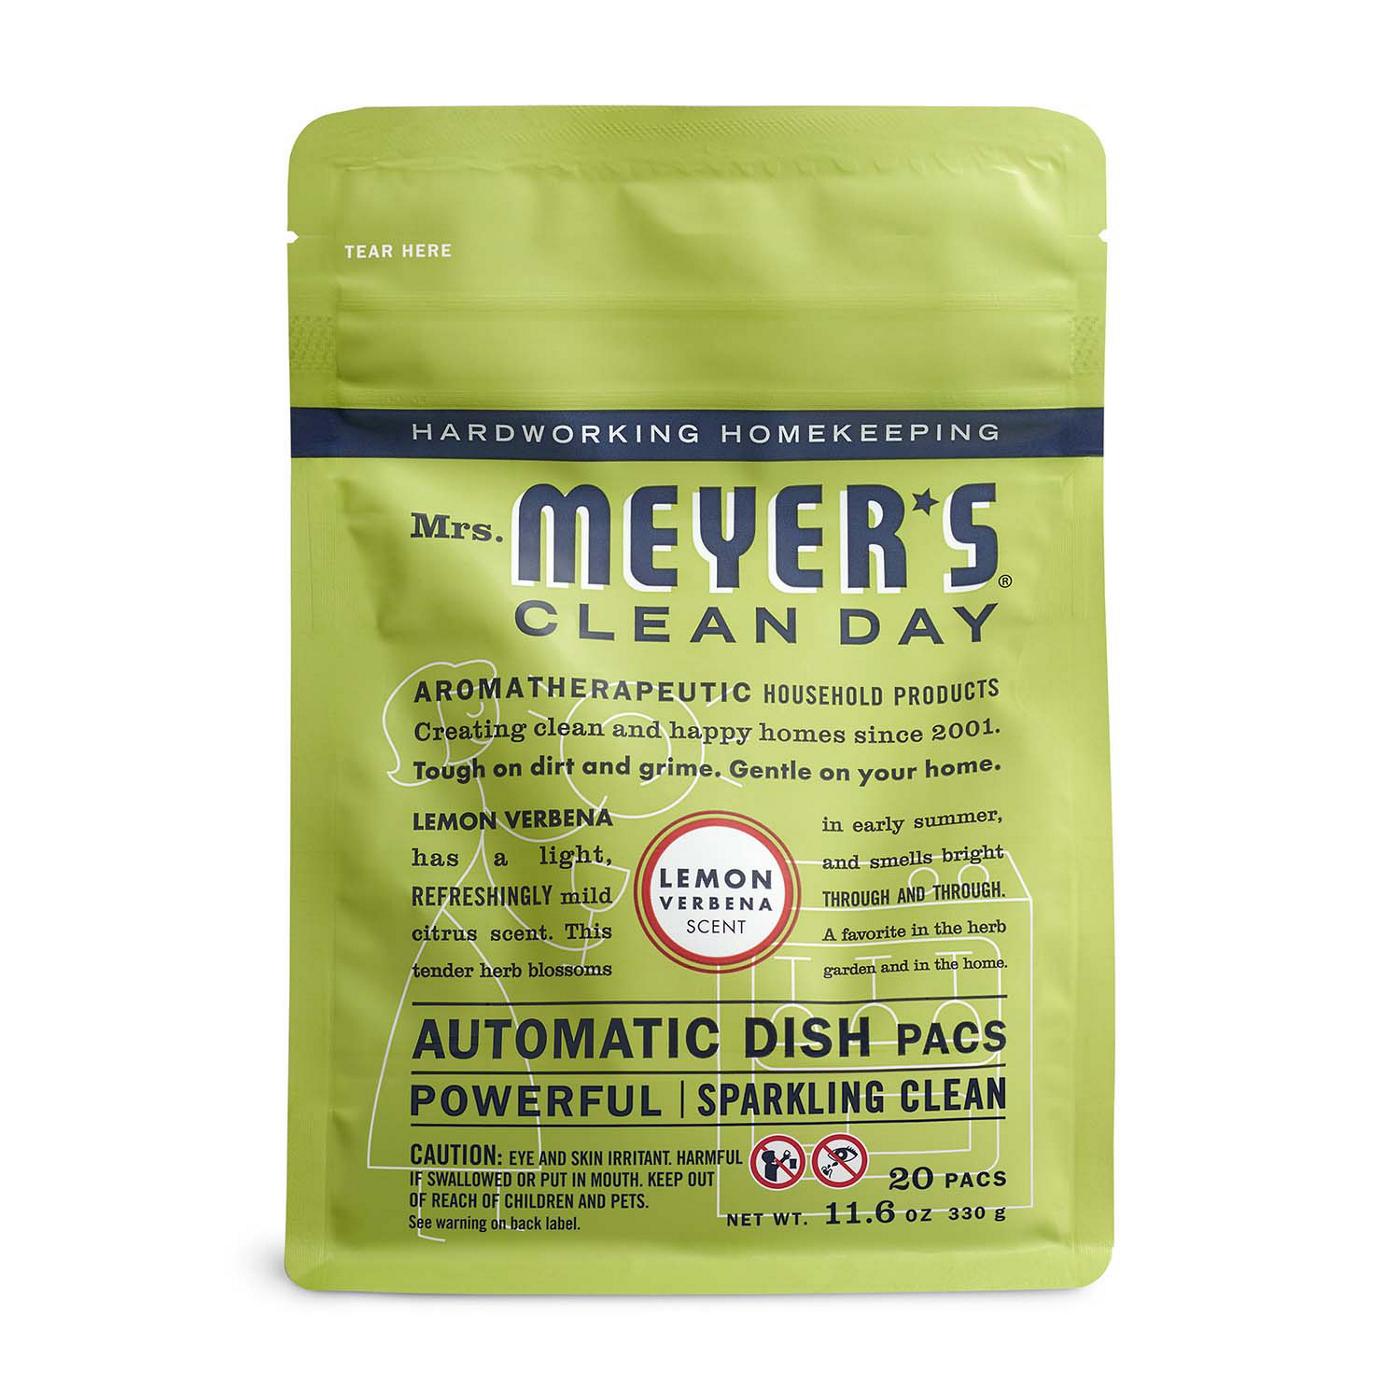 Mrs. Meyer's Clean Day Lemon Verbena Automatic Dish Packs; image 1 of 2